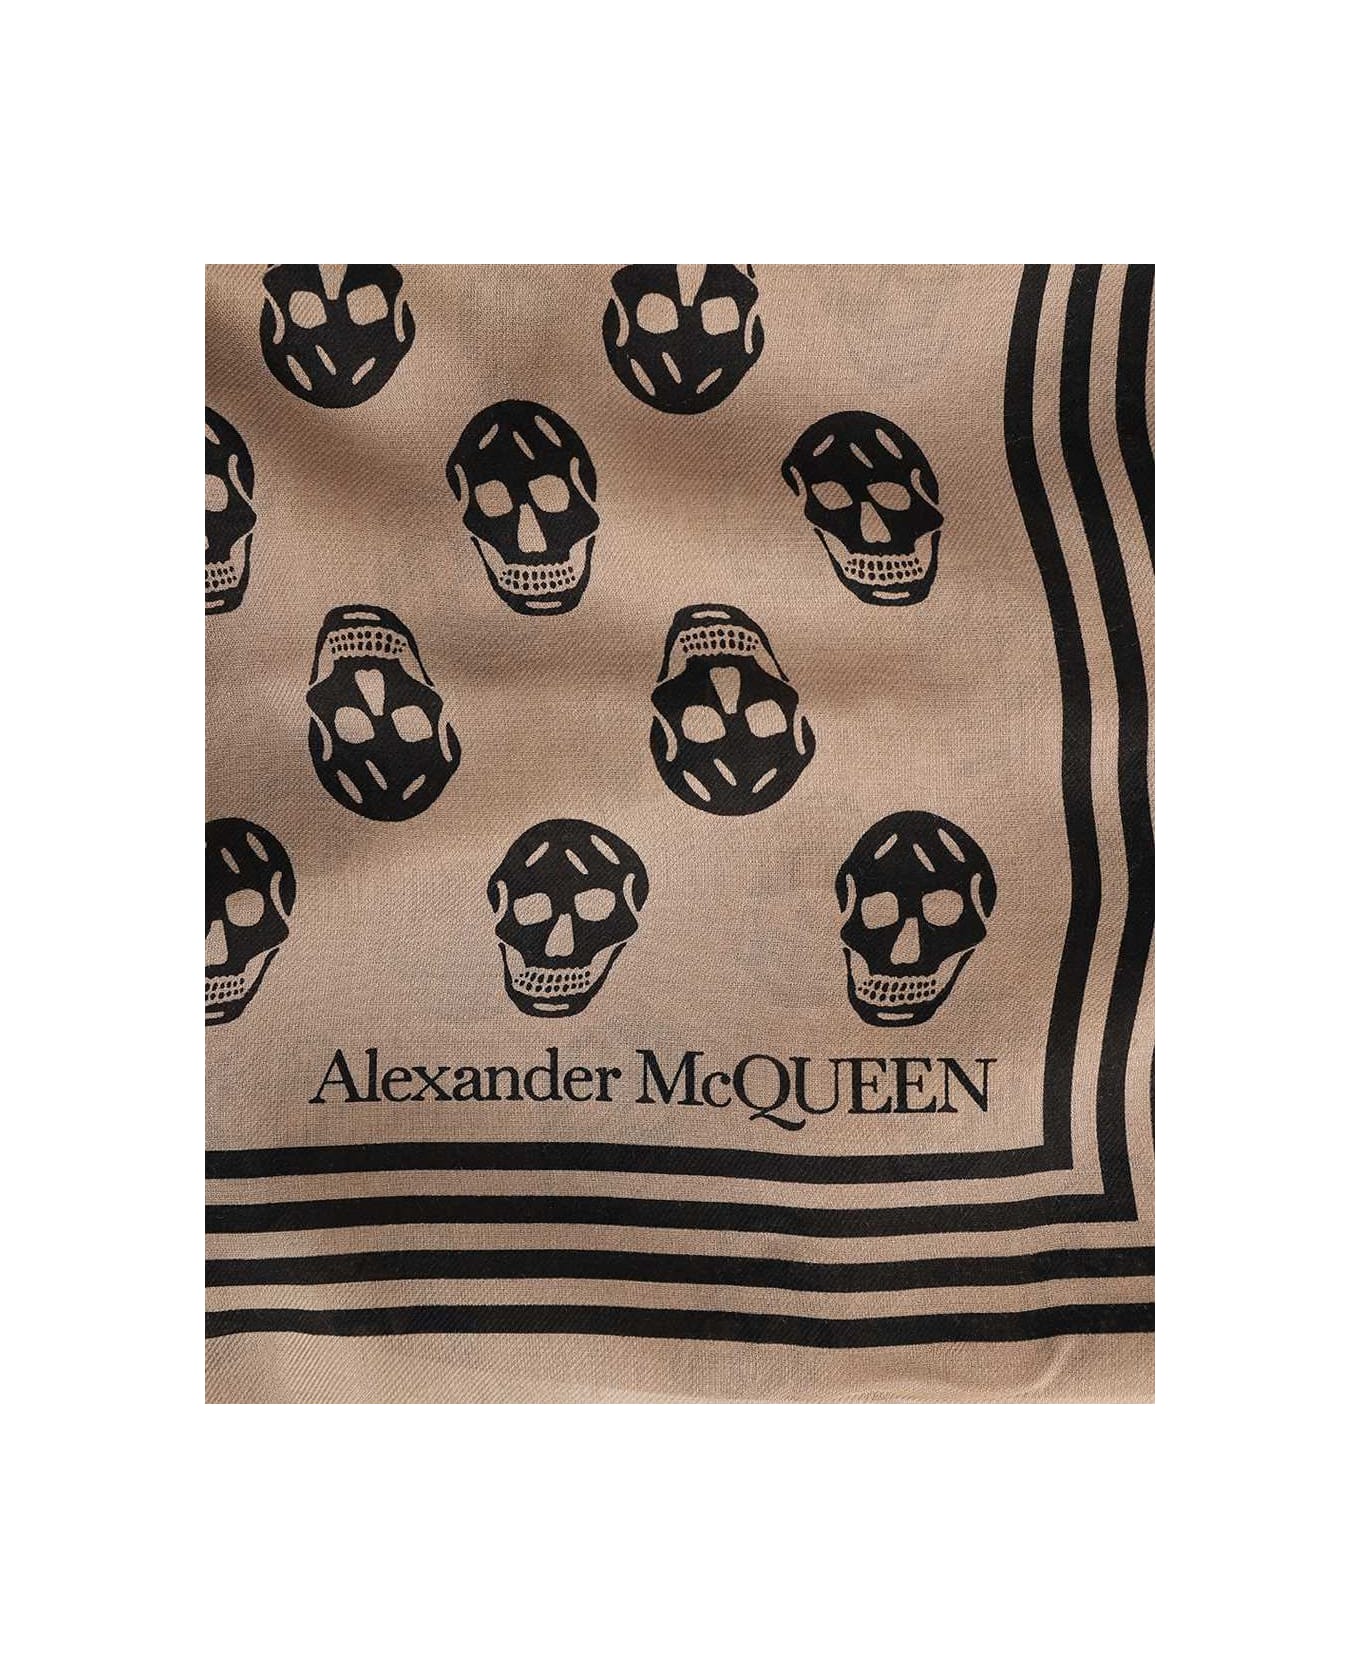 Alexander McQueen Skull Print Scarf - brown